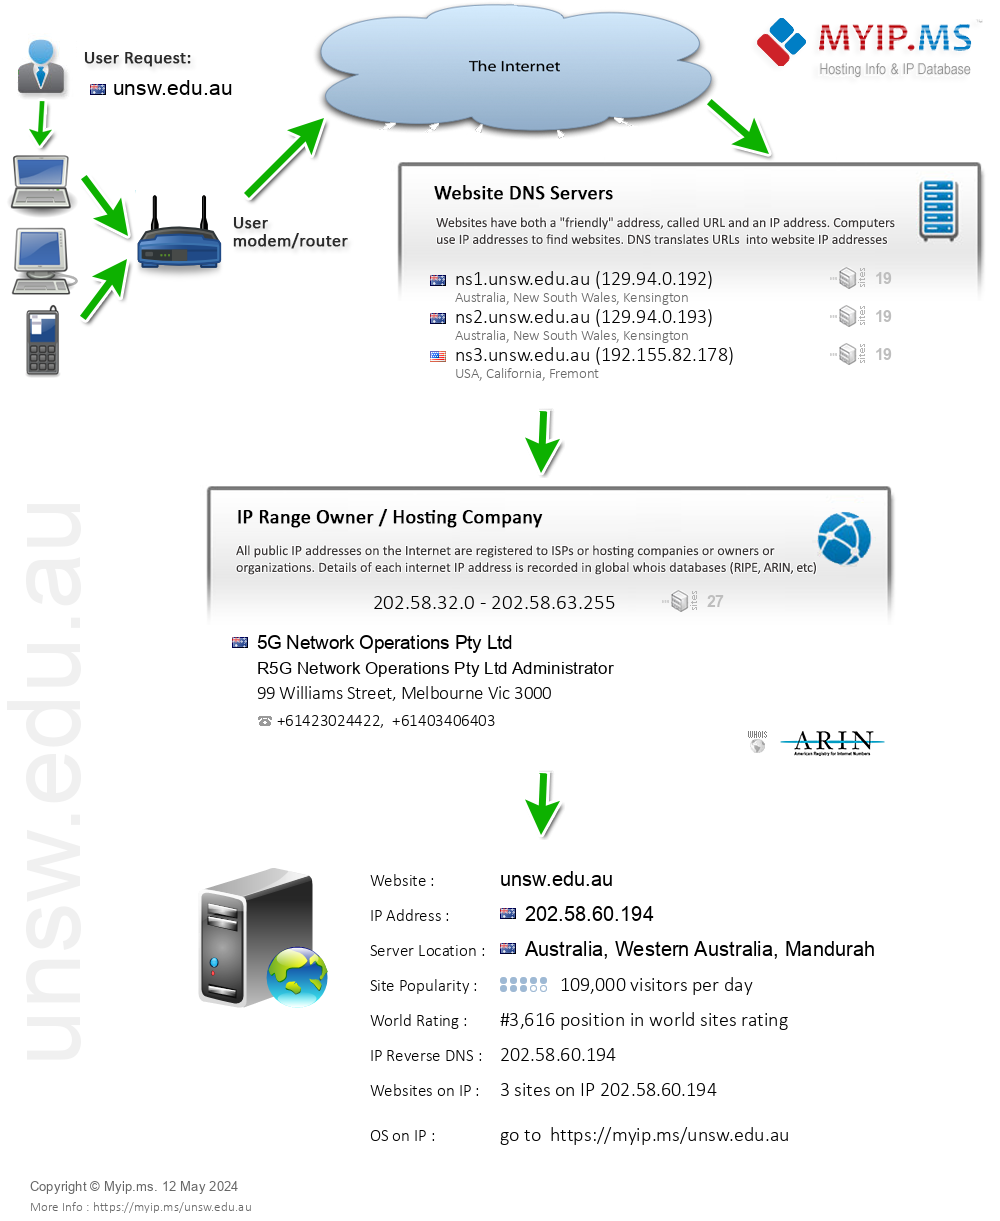 Unsw.edu.au - Website Hosting Visual IP Diagram